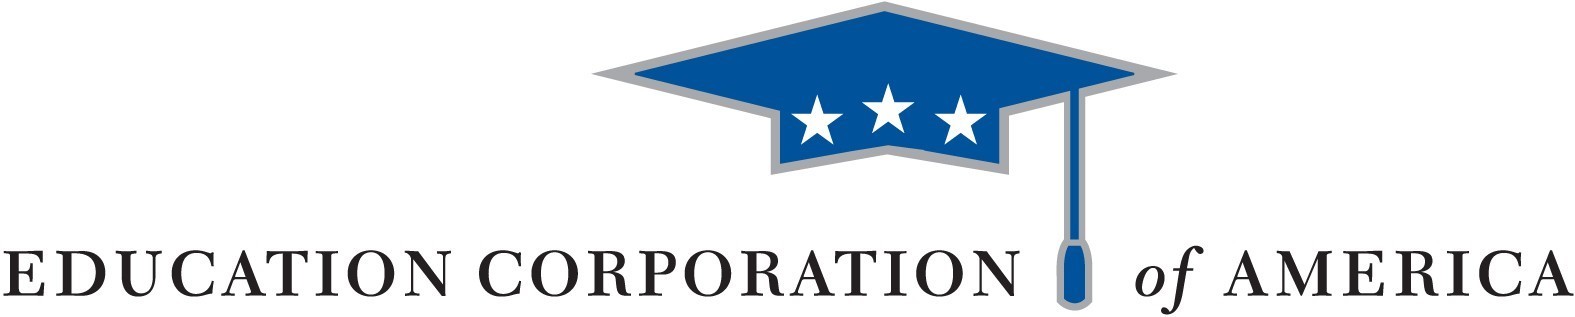 Education Corporation of America logo